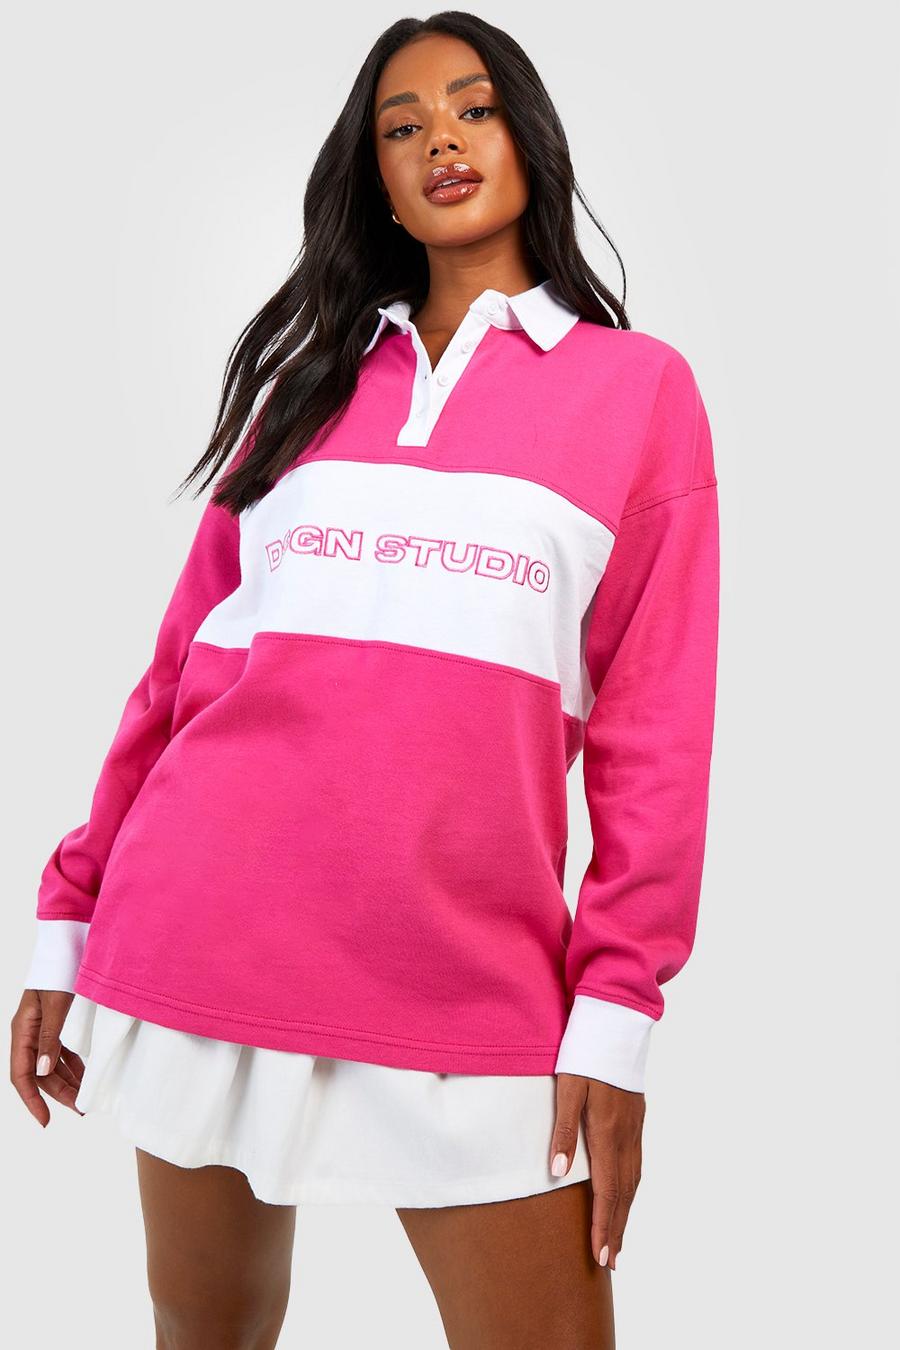 Camisa de rugby Dsgn Studio, Pink image number 1